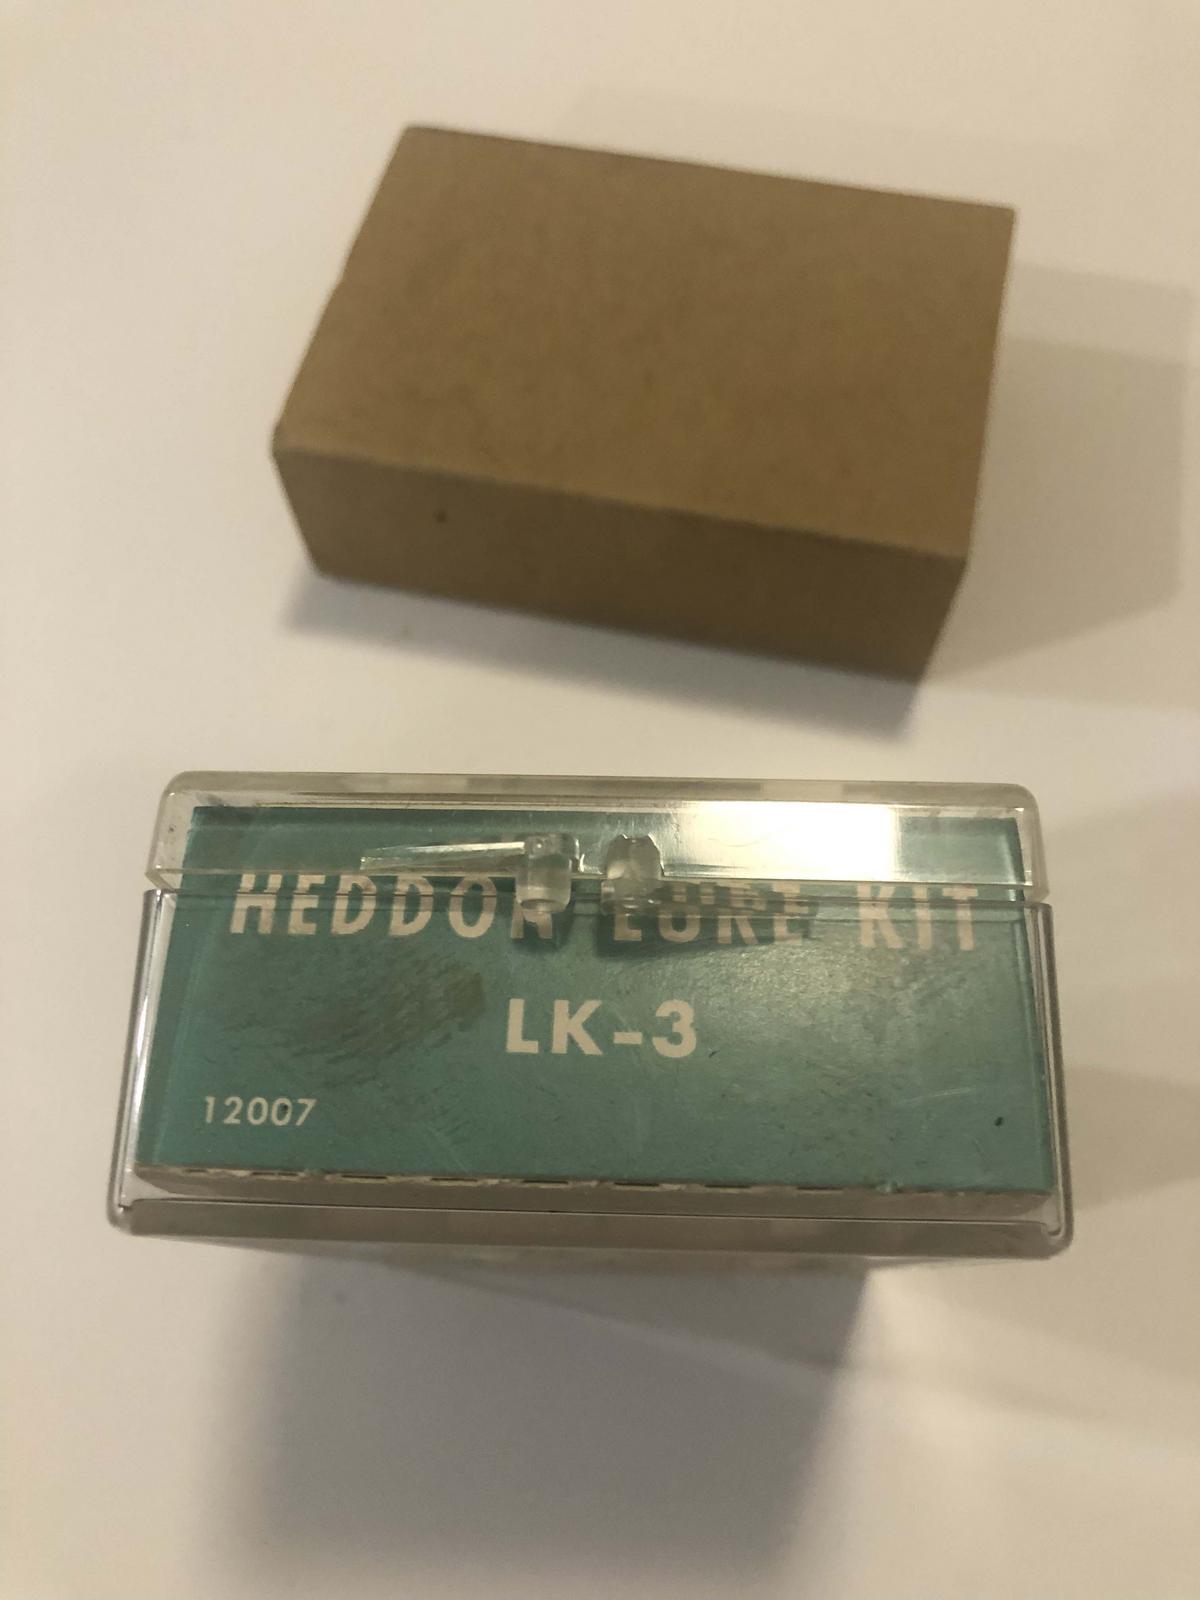 RARE* Vintage Champlin Oil Heddon Lure Kit